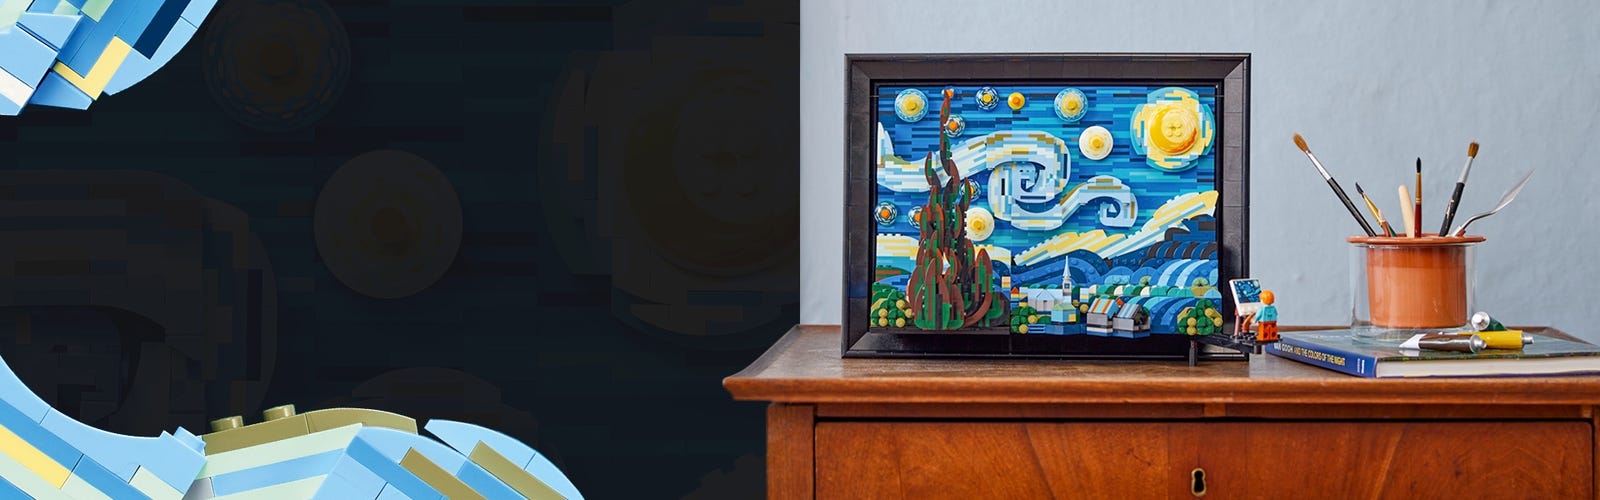 LEGO Vincent van Gogh Minifigure idea106 - 21333 The Starry Night